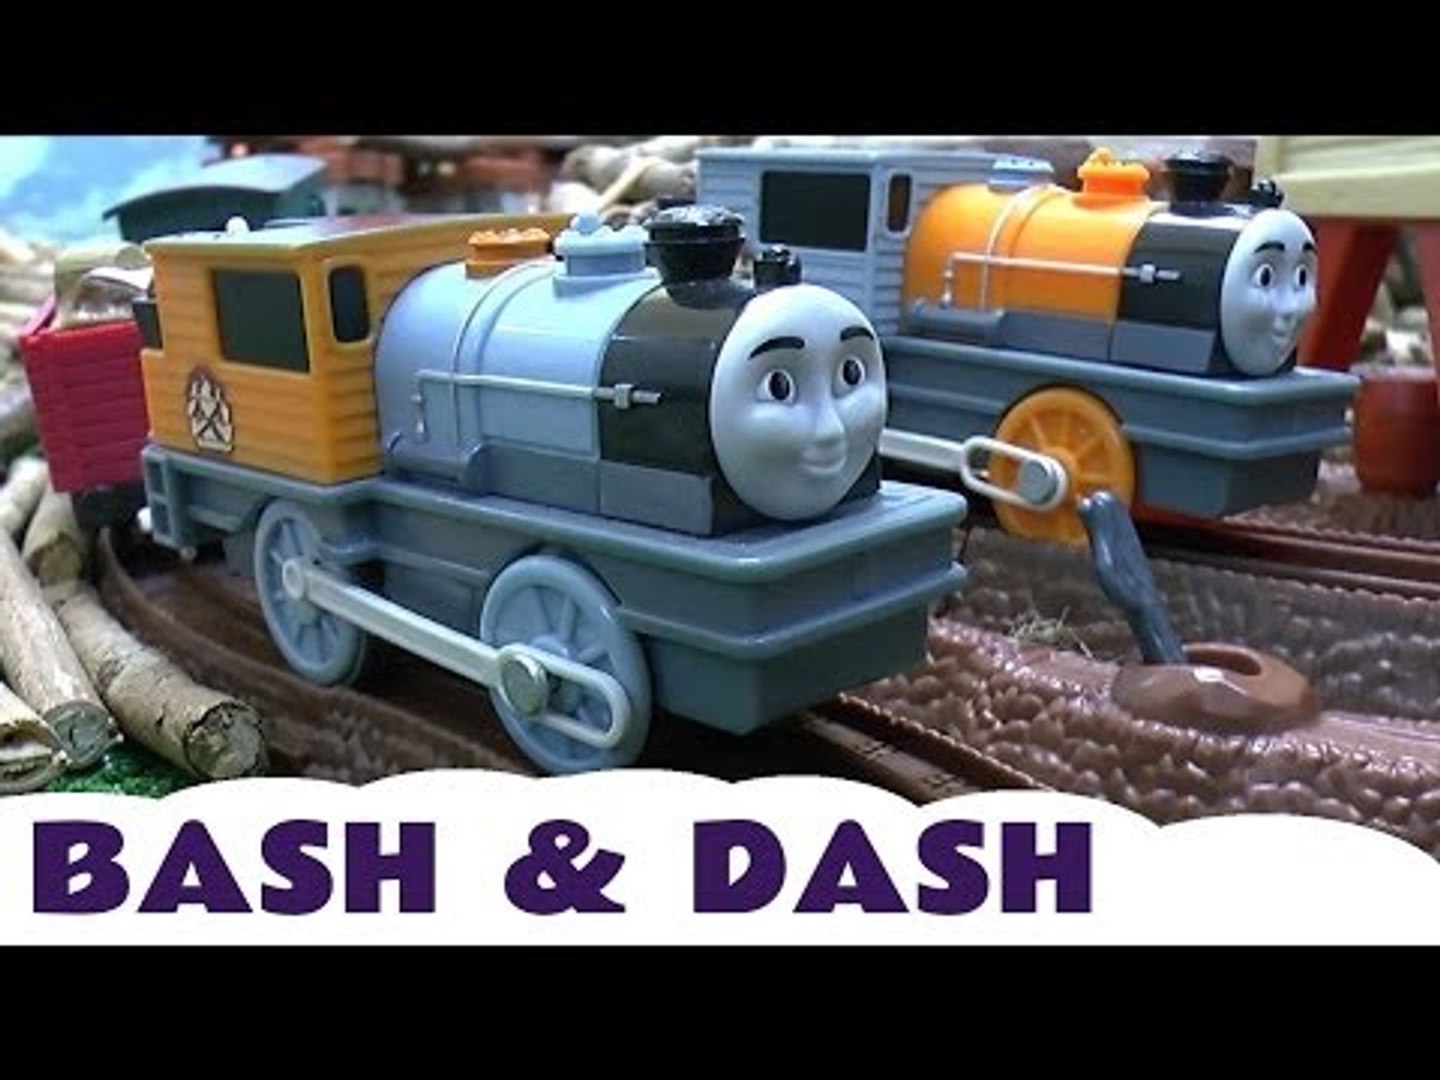 Bash & Dash Thomas the Tank Engine Trackmaster NEW IN BOX 